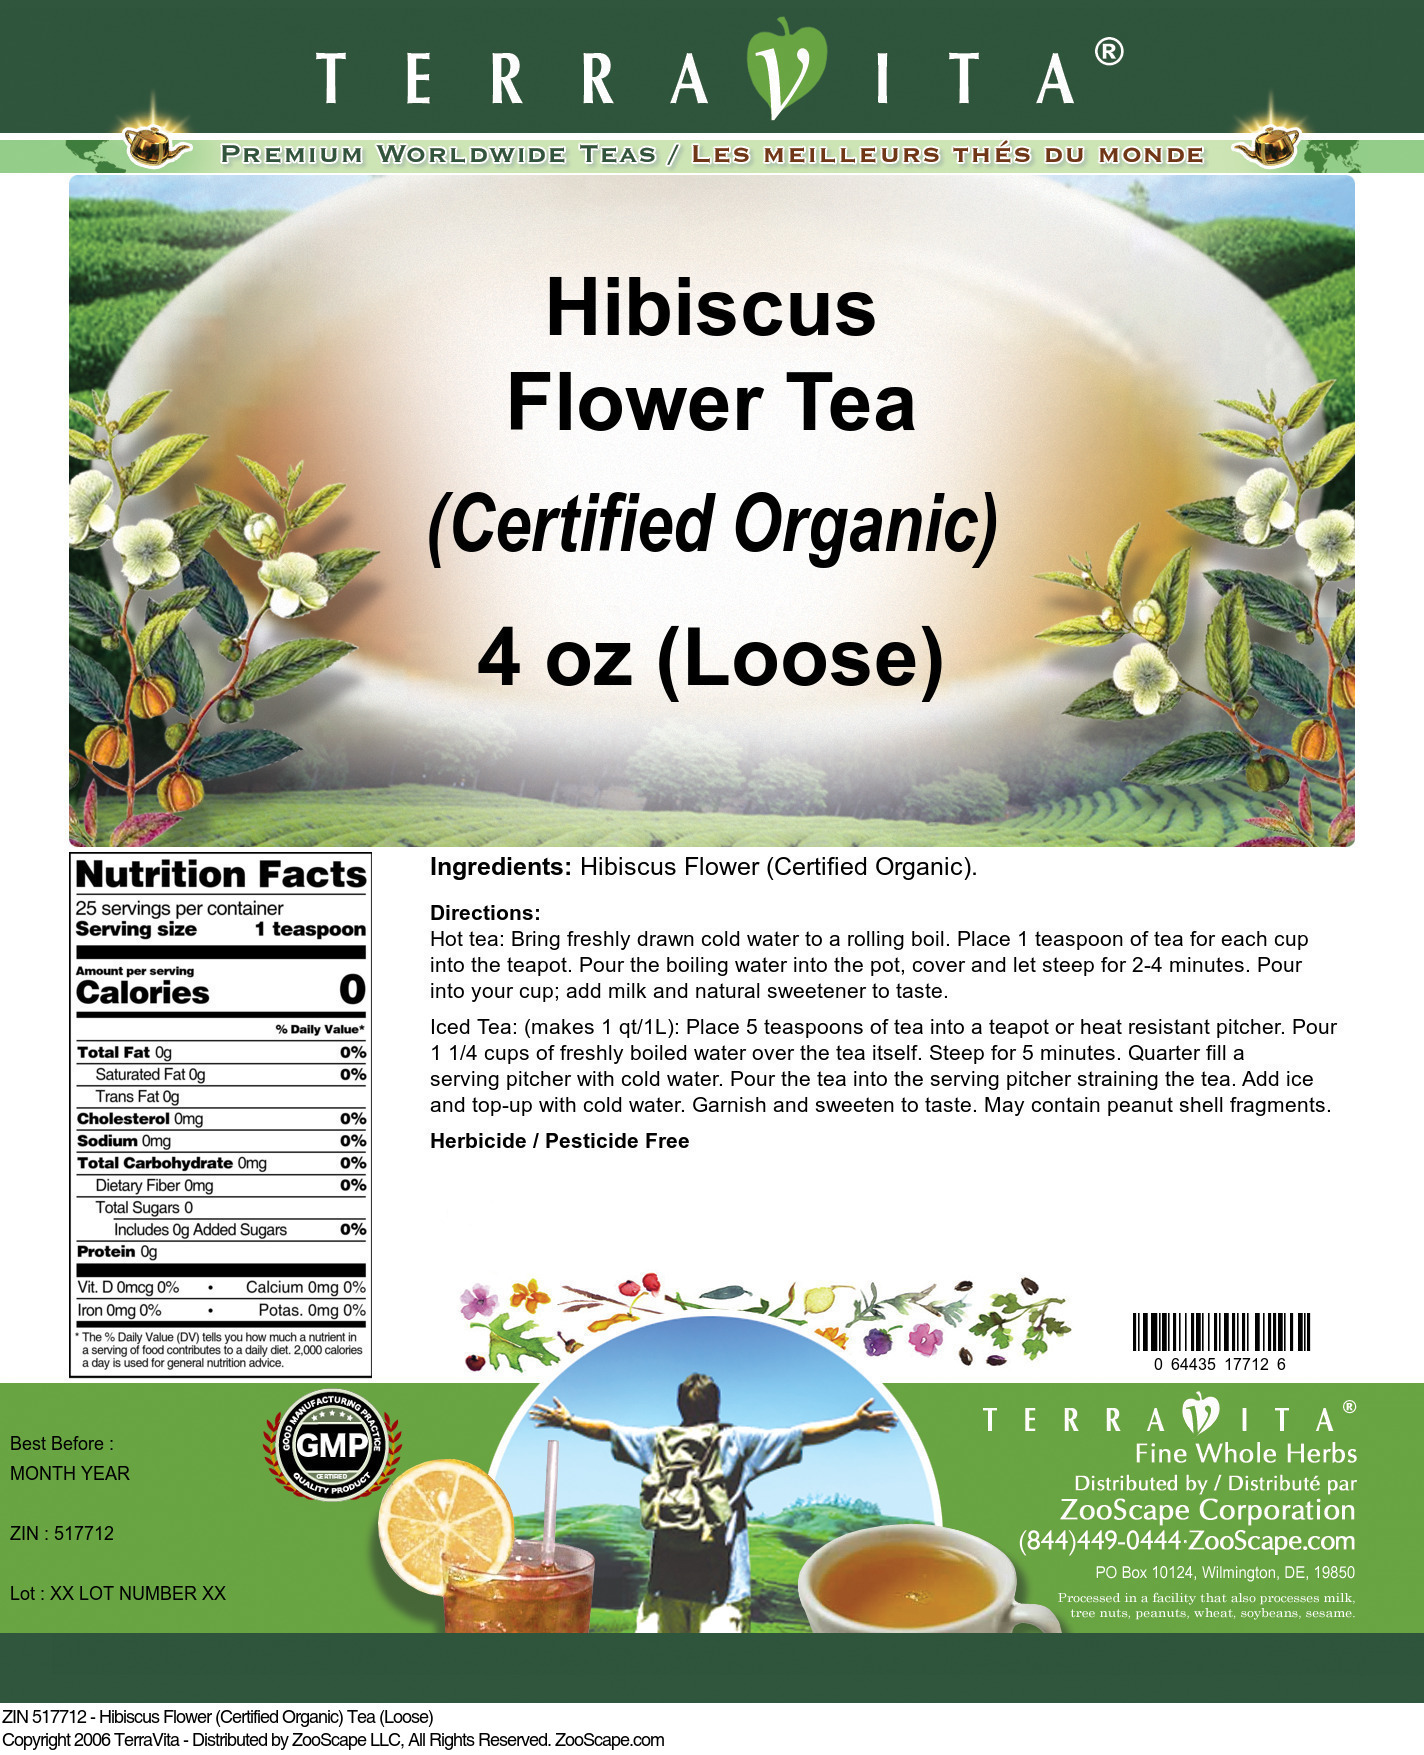 Hibiscus Flower (Certified Organic) Tea (Loose) - Label